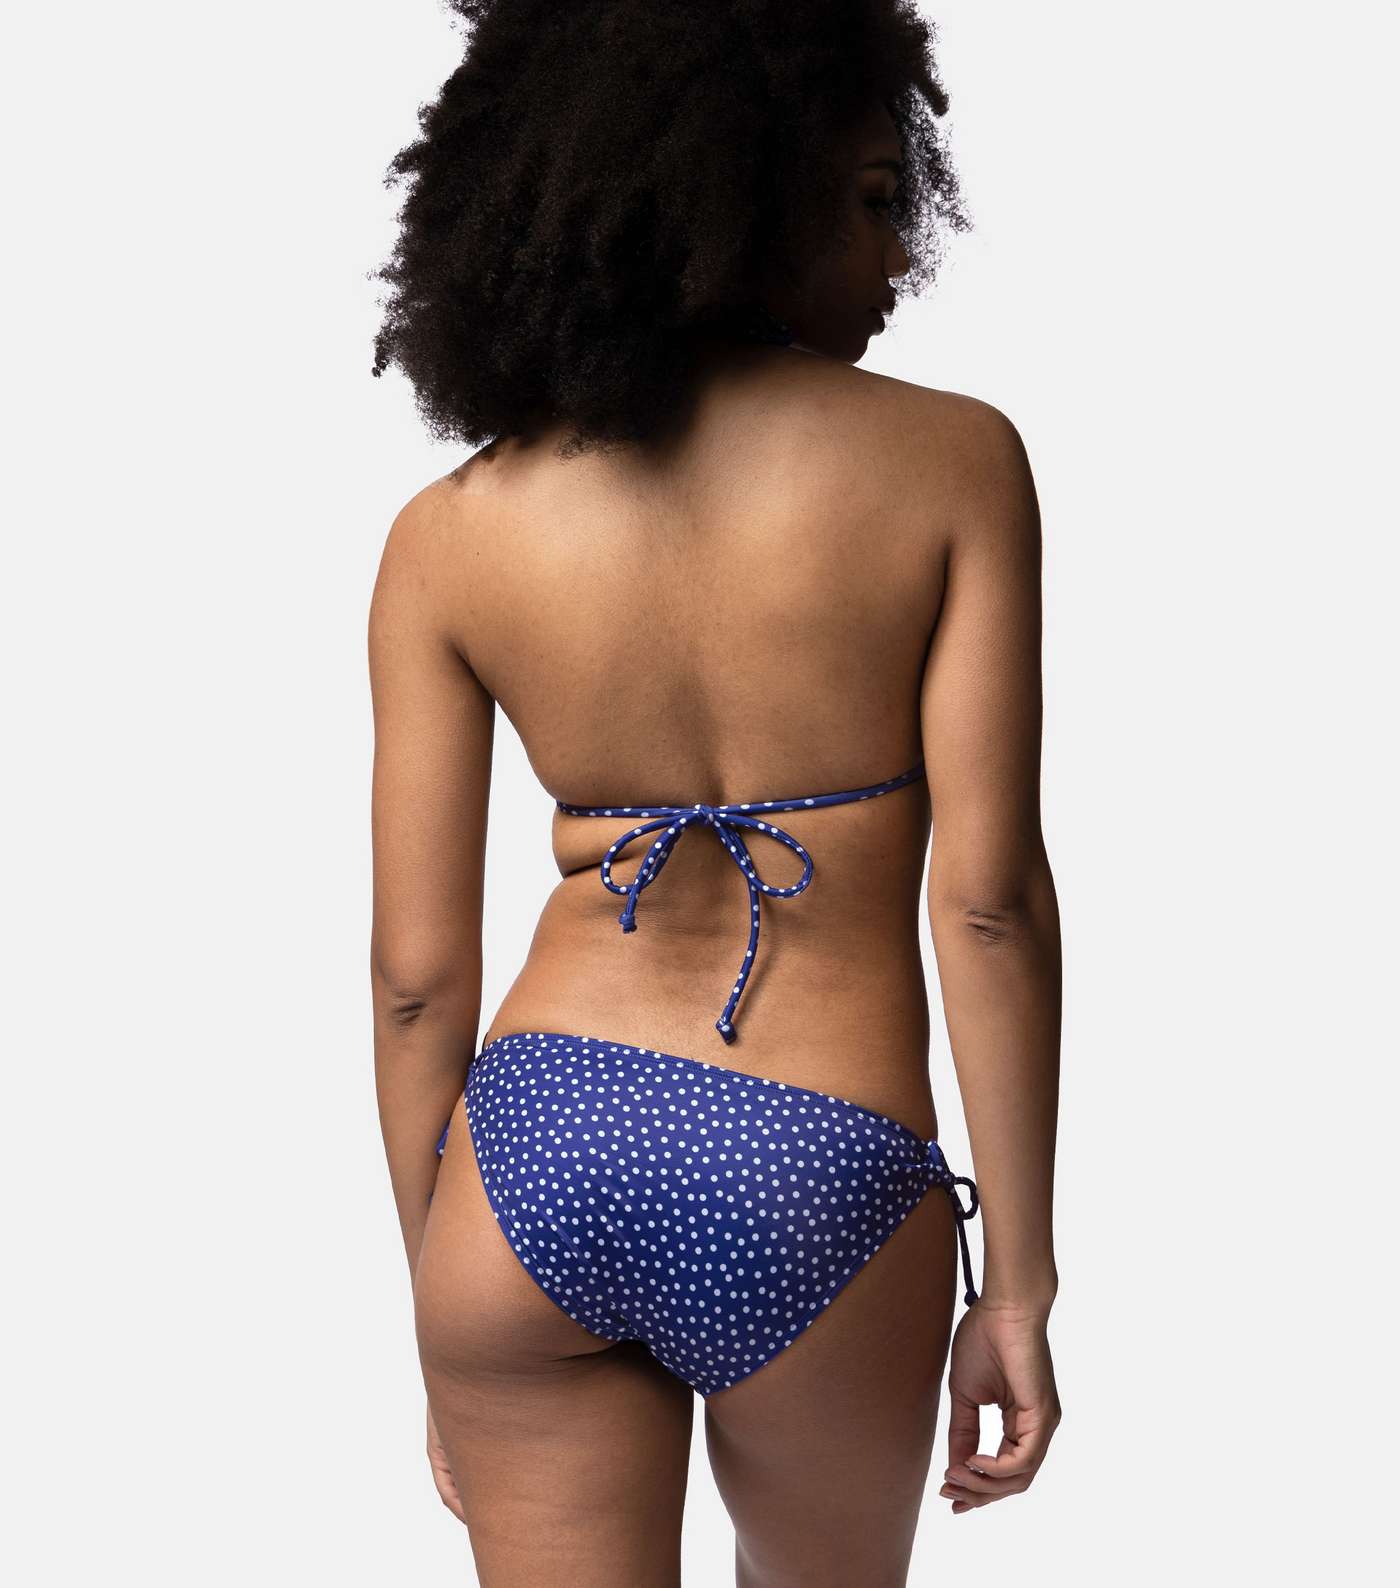 Dorina Blue Spot and White Triangle Bikini Tops Image 3